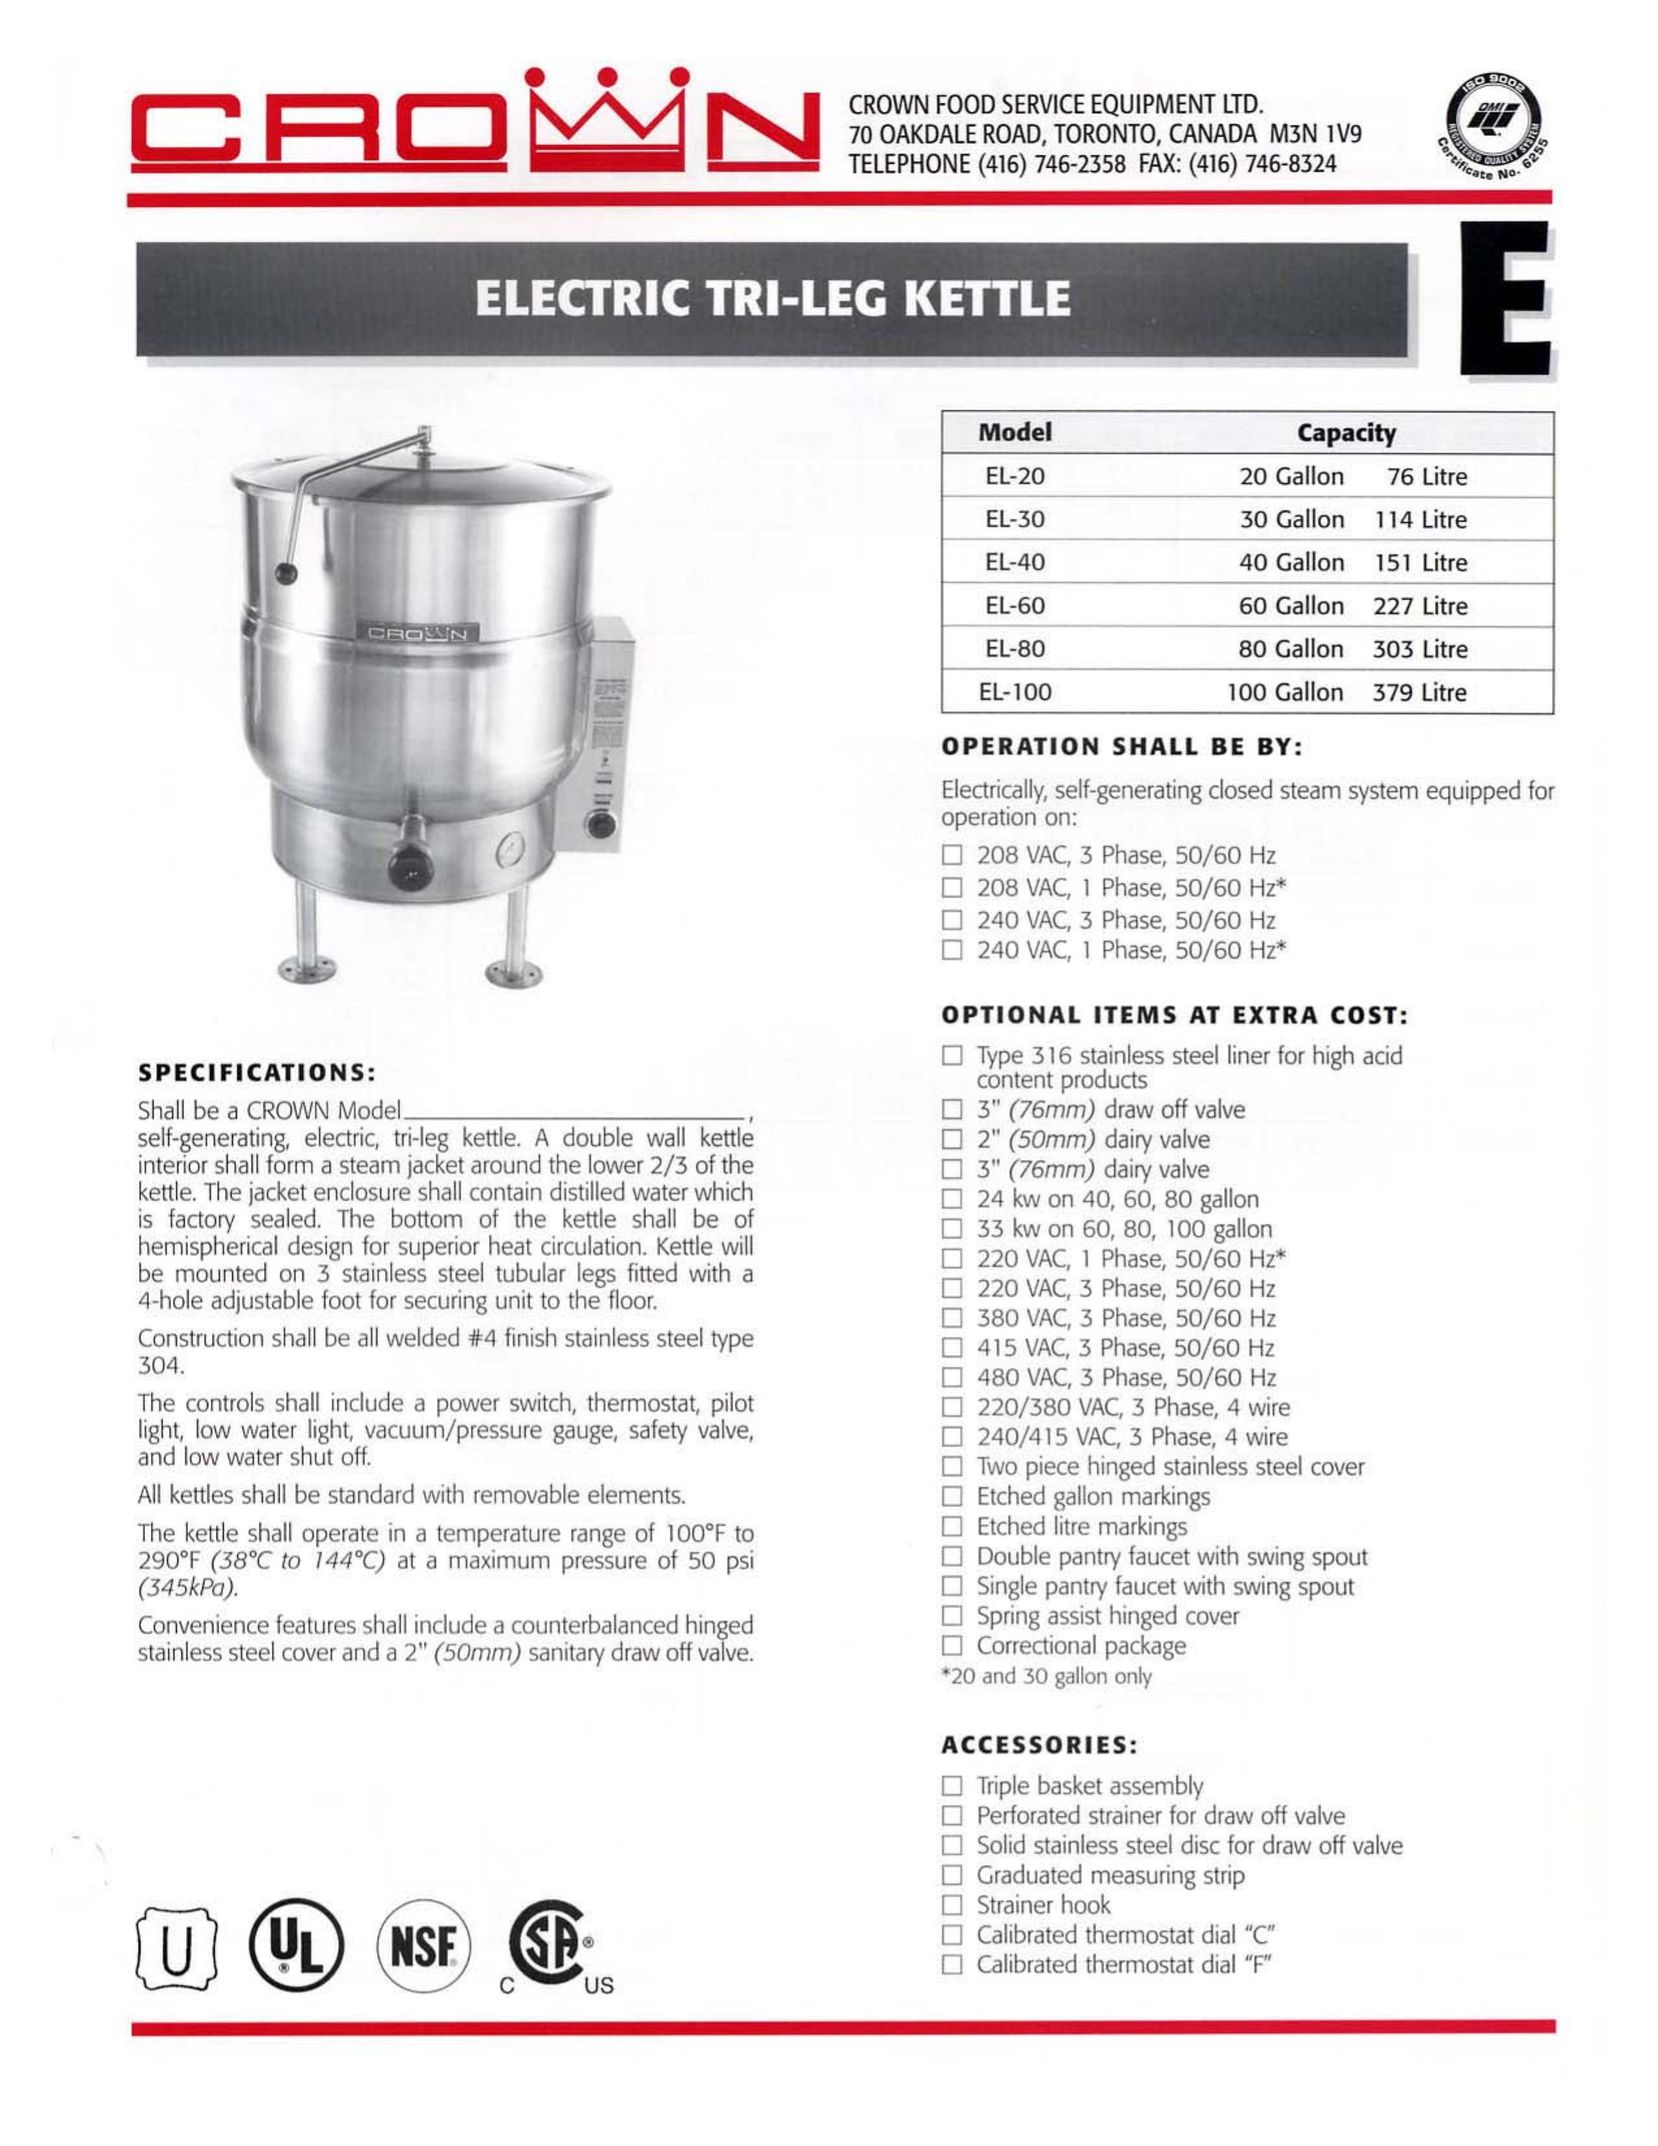 Crown Equipment EL-40 Hot Beverage Maker User Manual